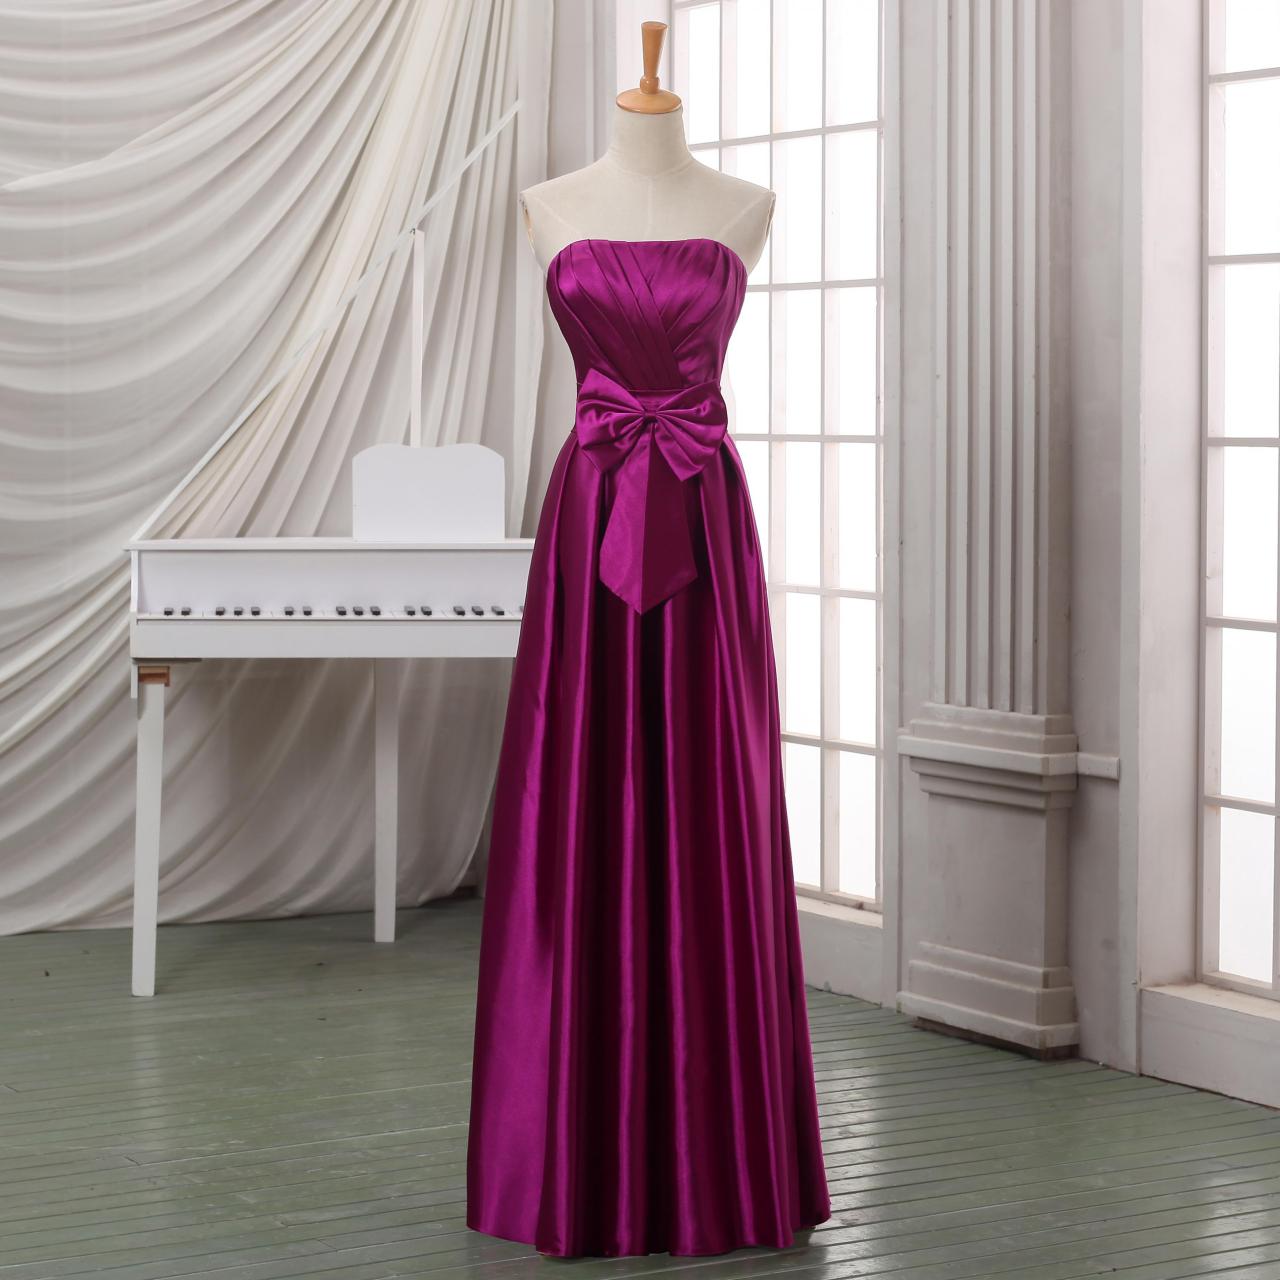 Custom Purlish Red Long Prom Dress,strapless Empire Satin Prom Dress/evening Dress/formal Dress/formal Wowens Dress With Bow Sash.